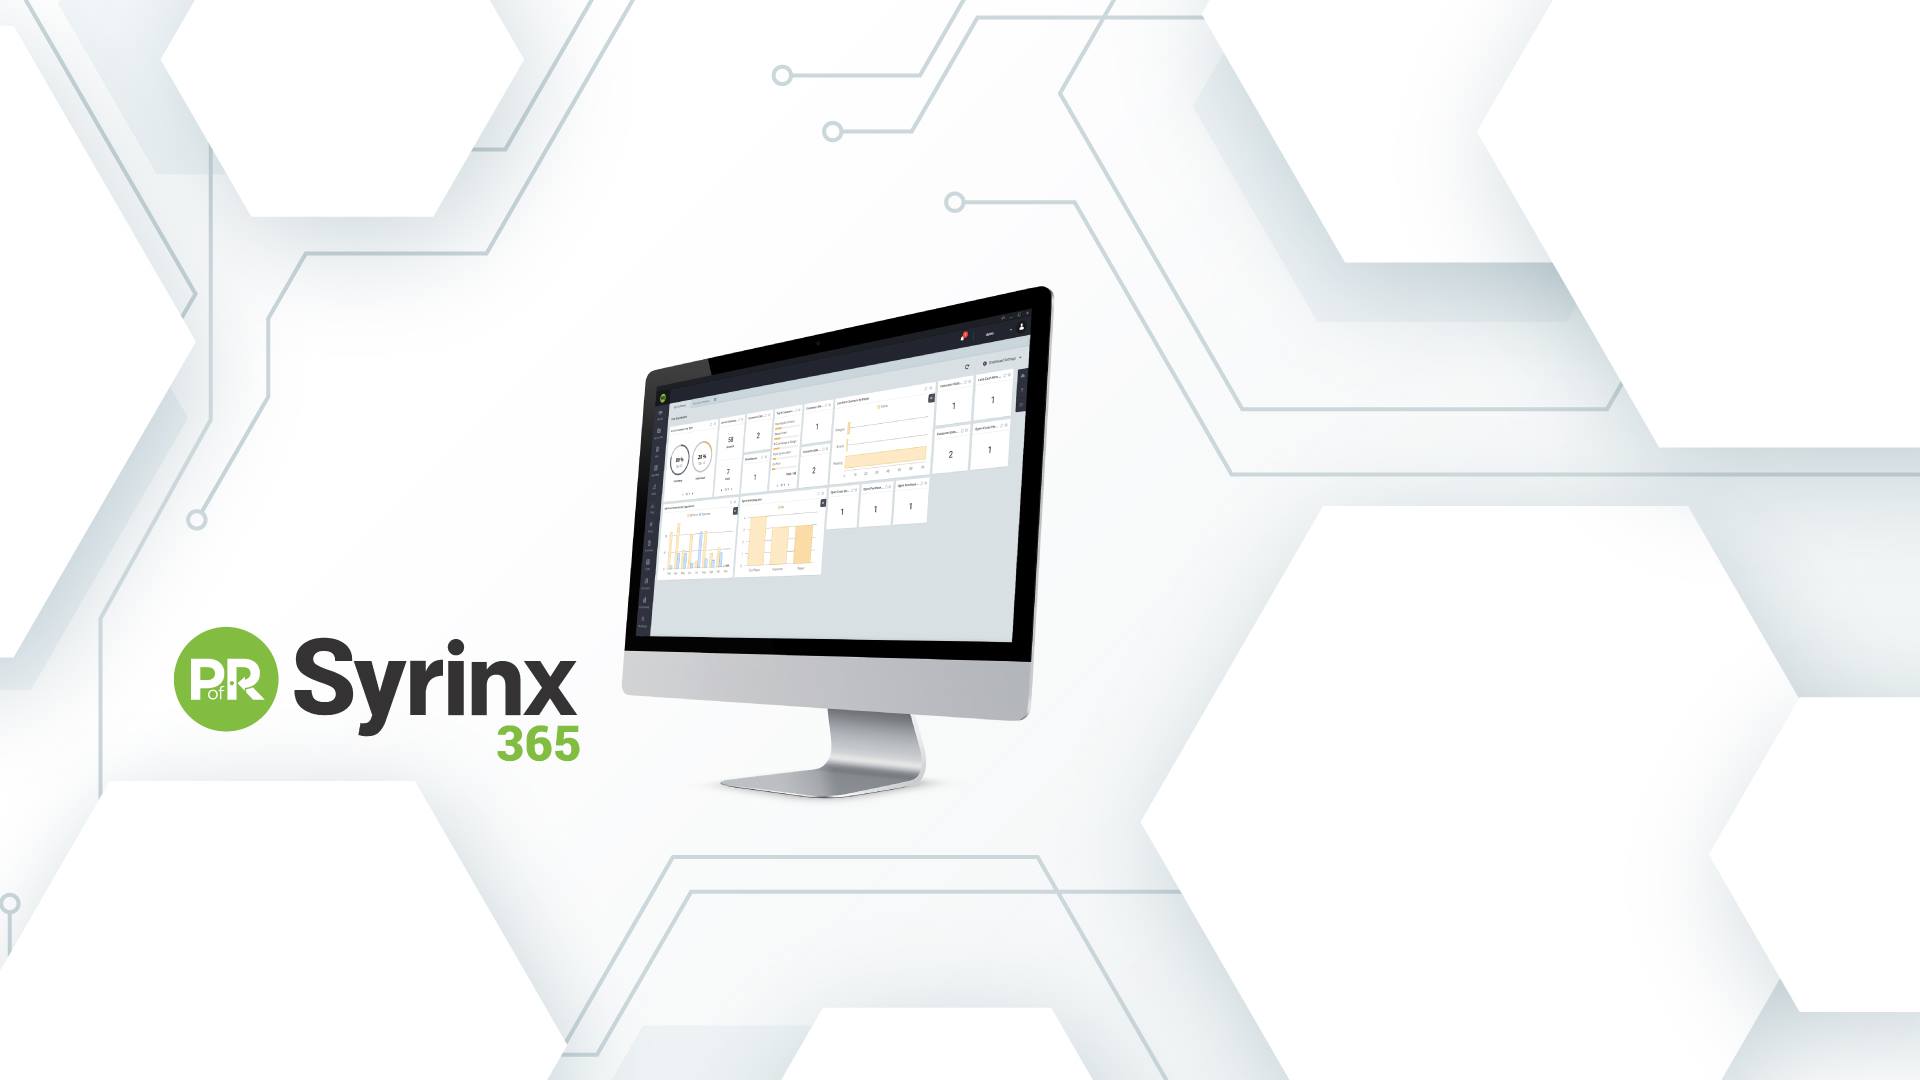 Syrinx 365 dashboard shown on a monitor.